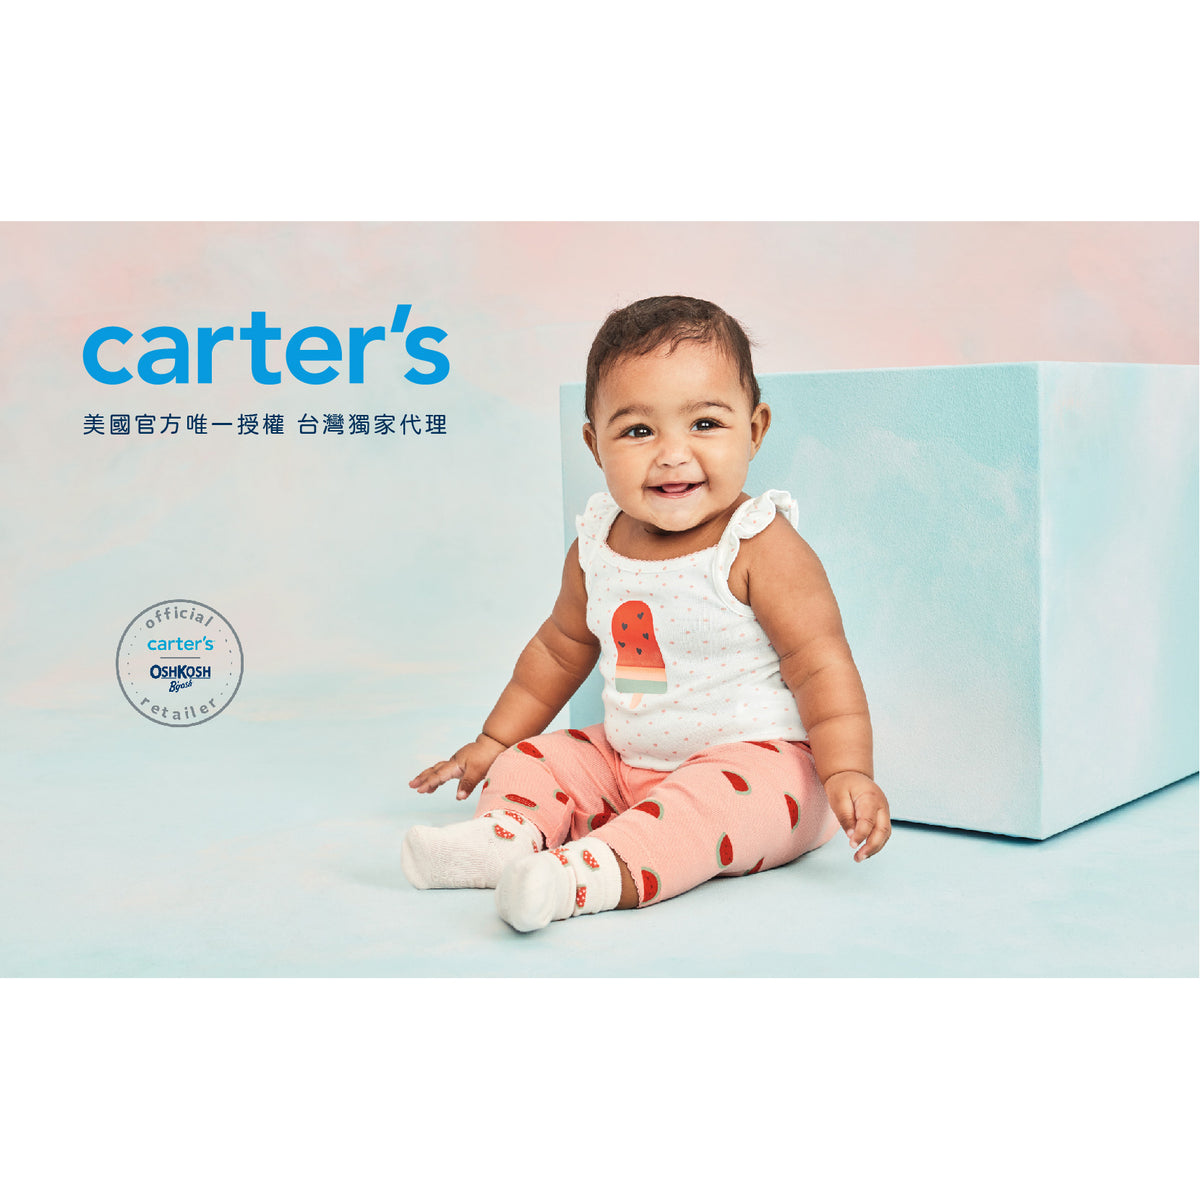 Carter's 粉白條紋3件組套裝(6M-24M)